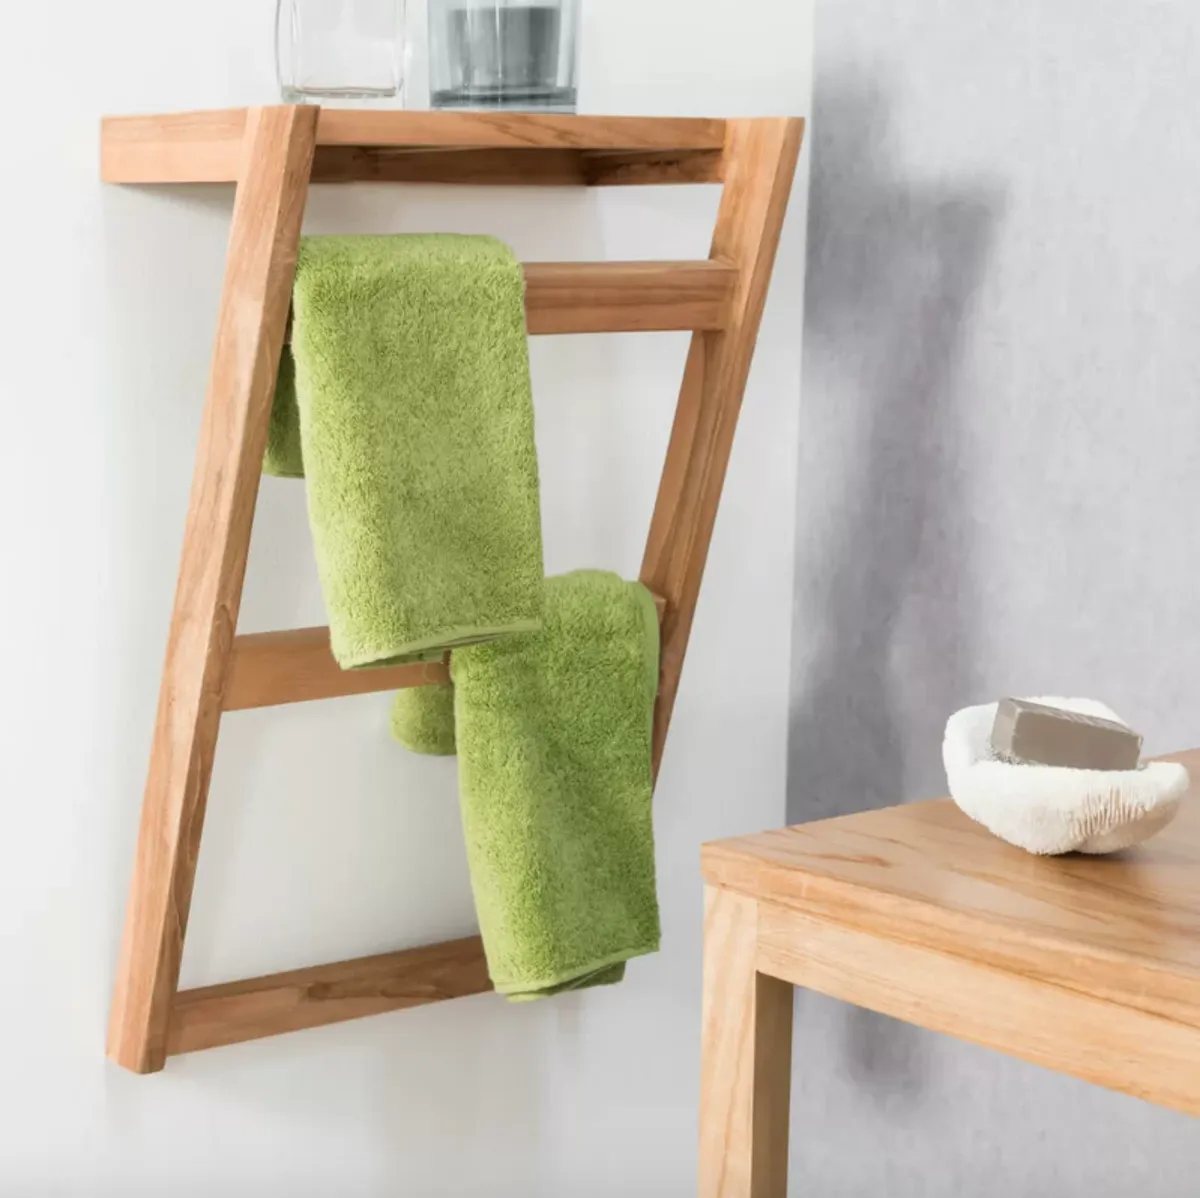 Towel storage ideas - sloping towel shelf